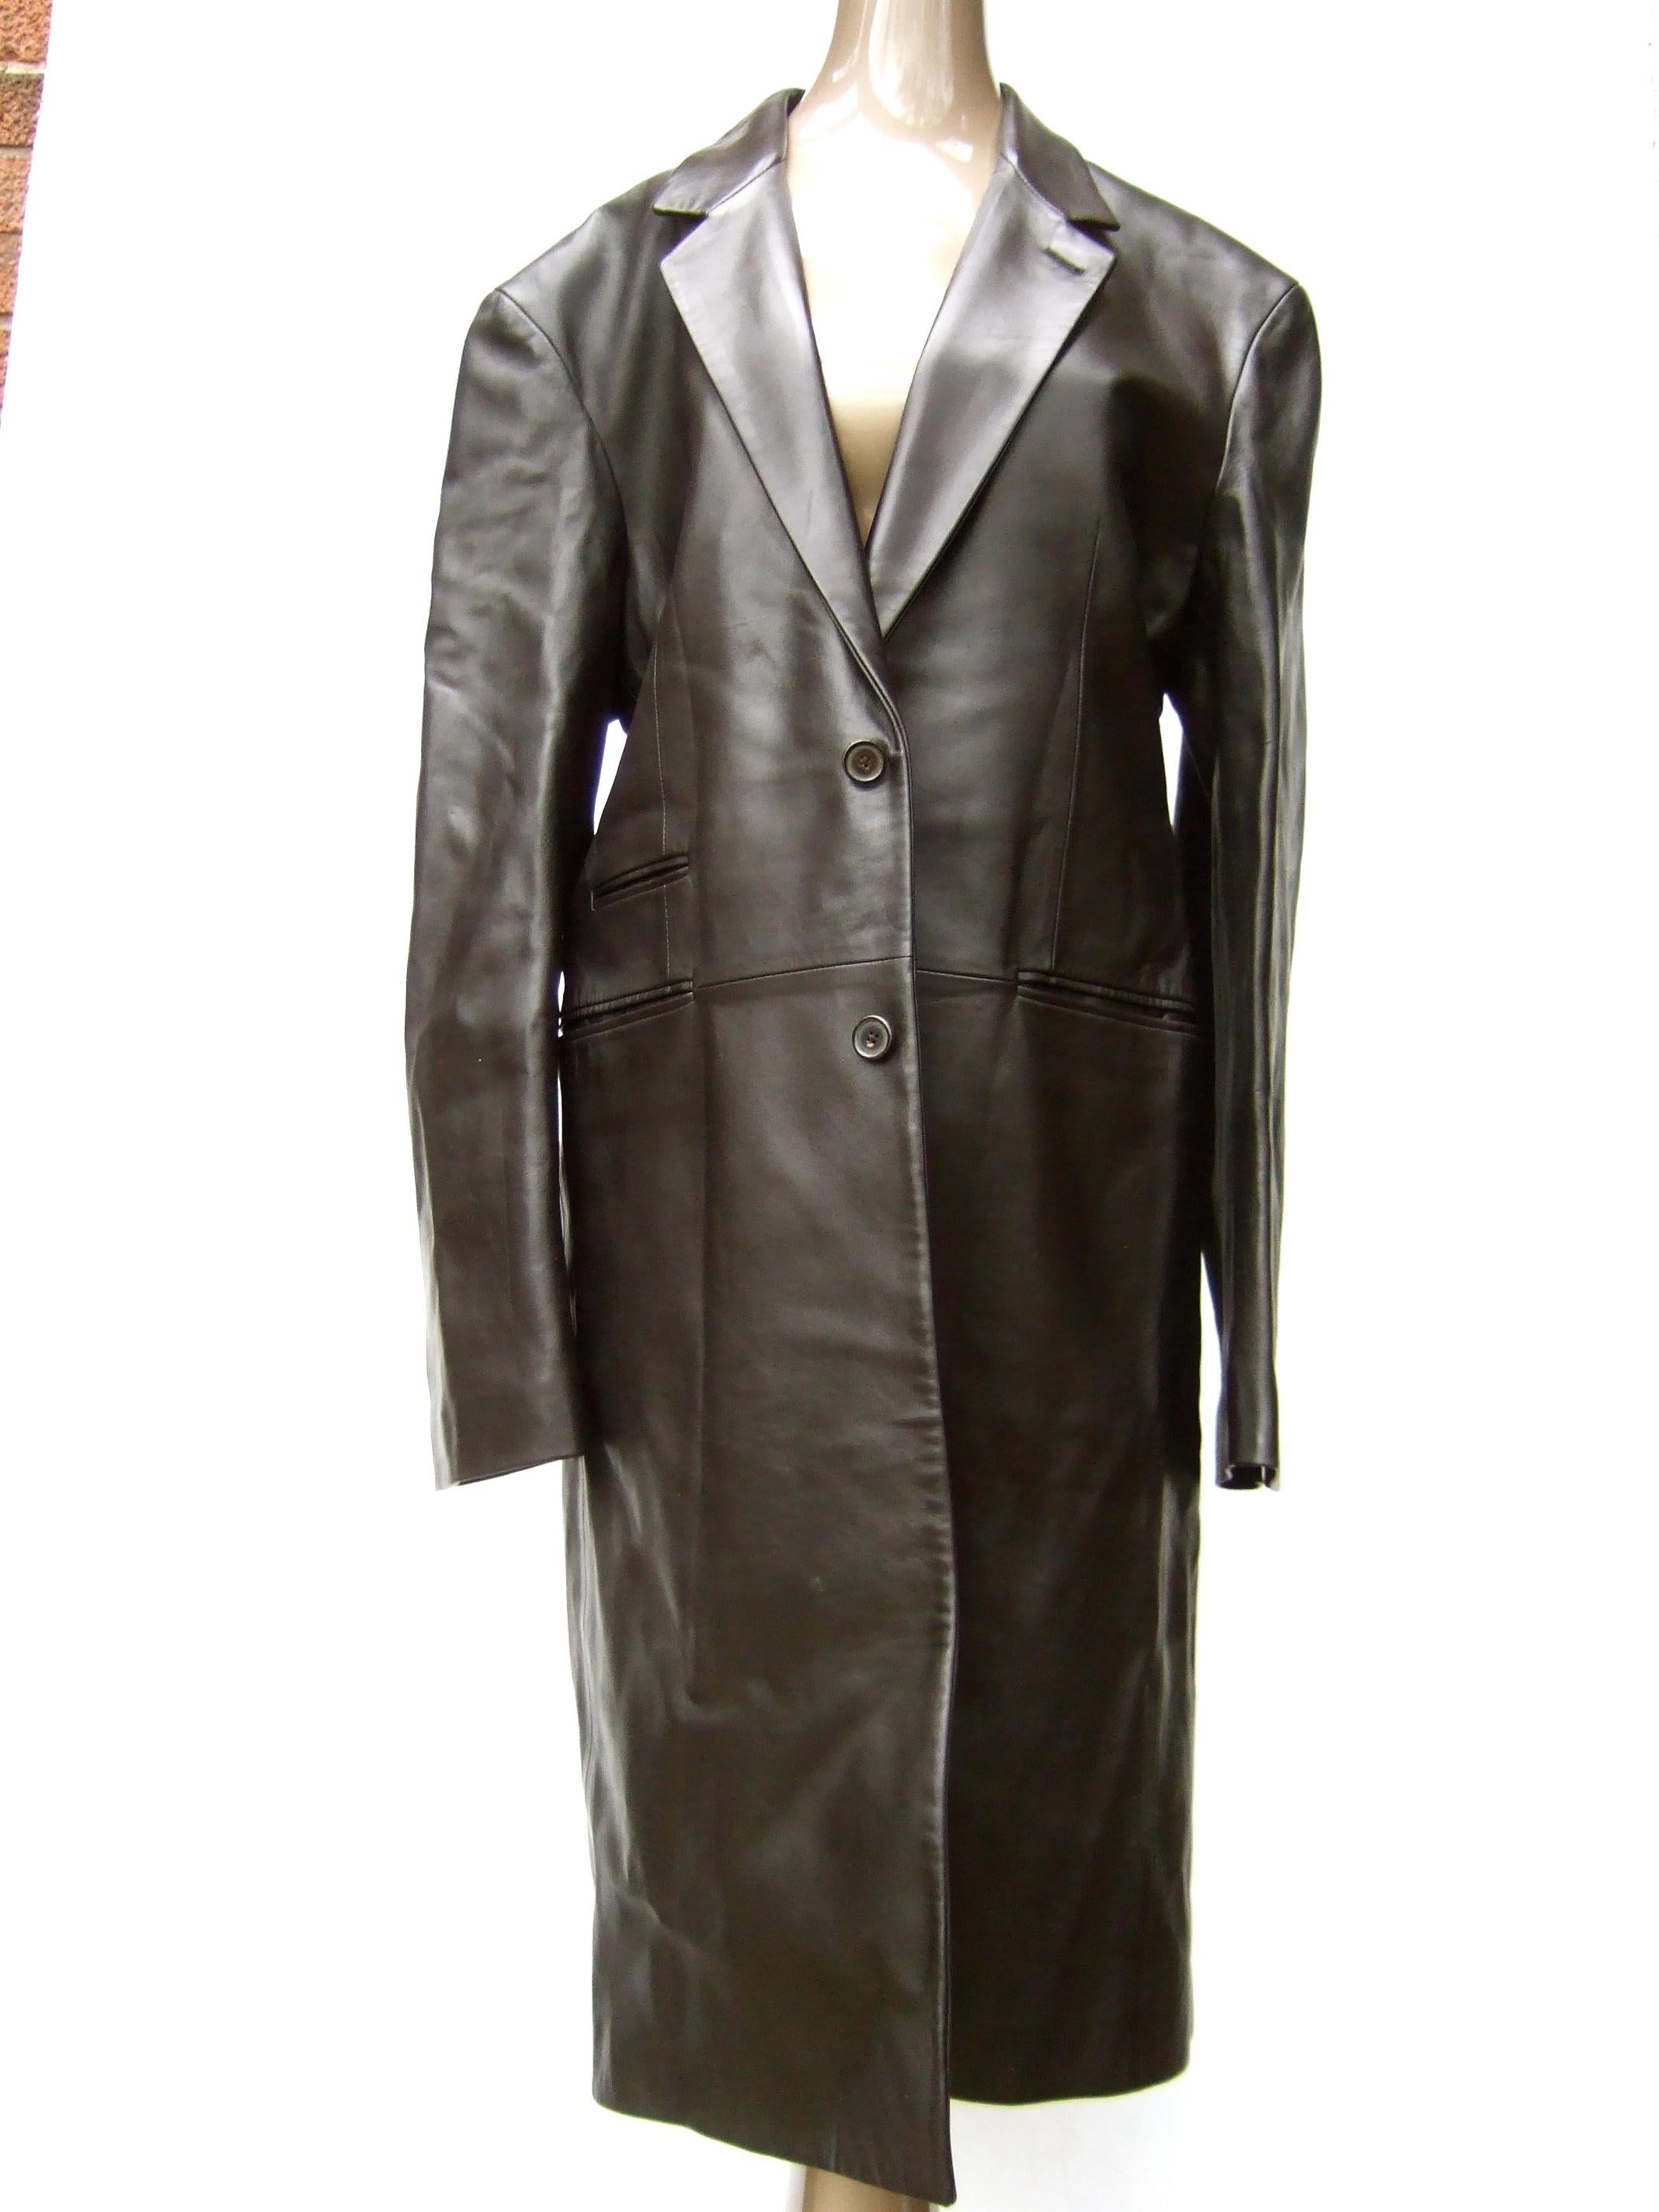 Hermes Men's Buttery Soft Black Lambskin Leather Unisex Coat Size 54 c 21st c  For Sale 1